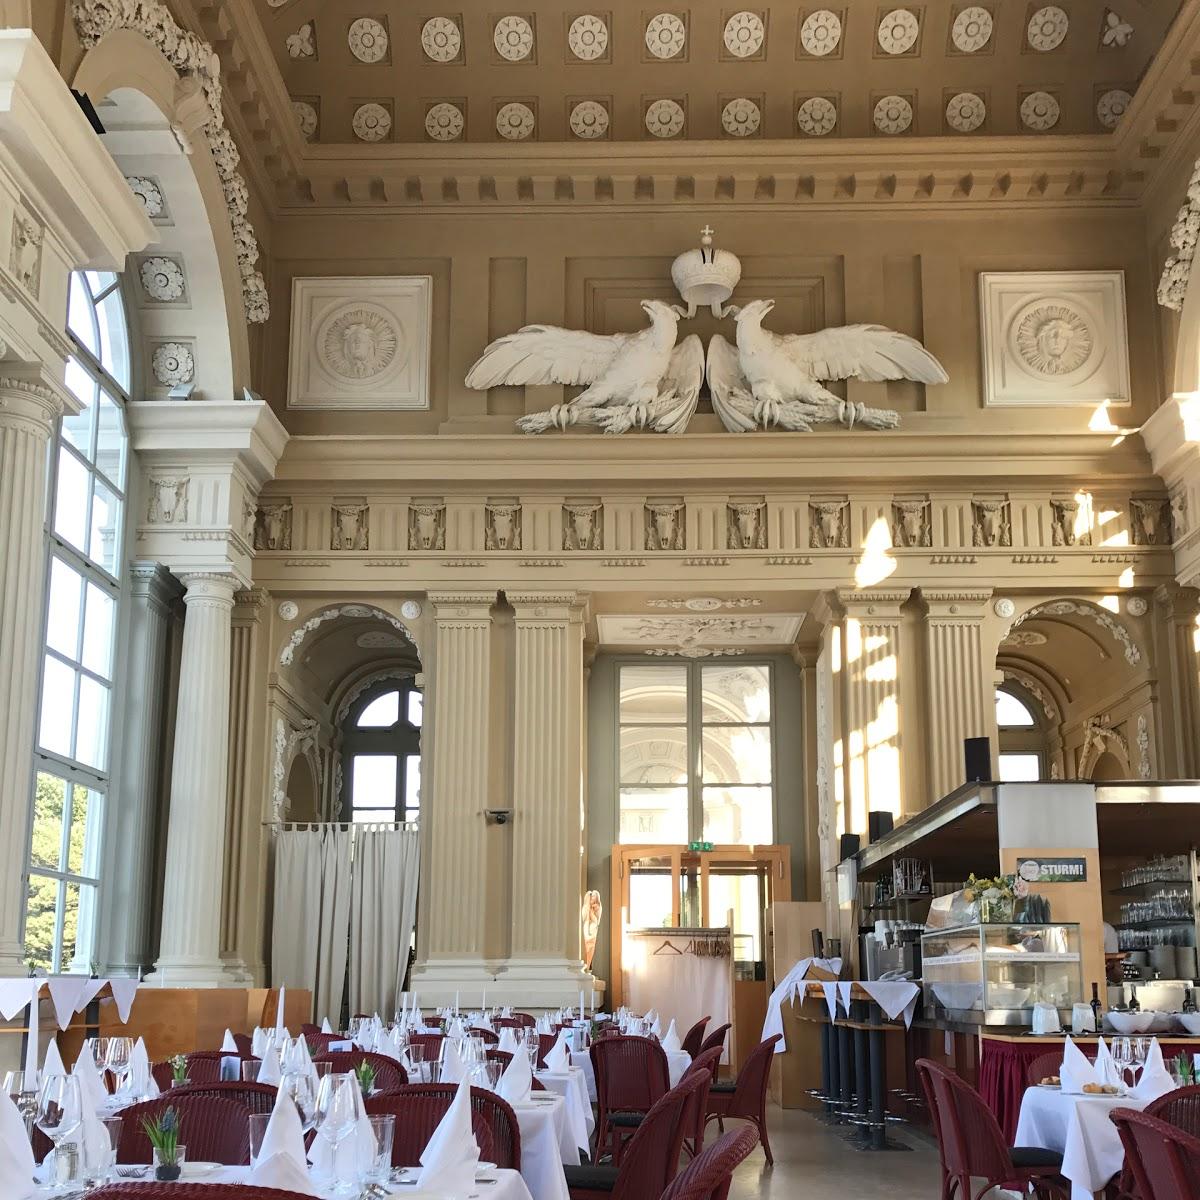 Restaurant "Café Gloriette" in Wien